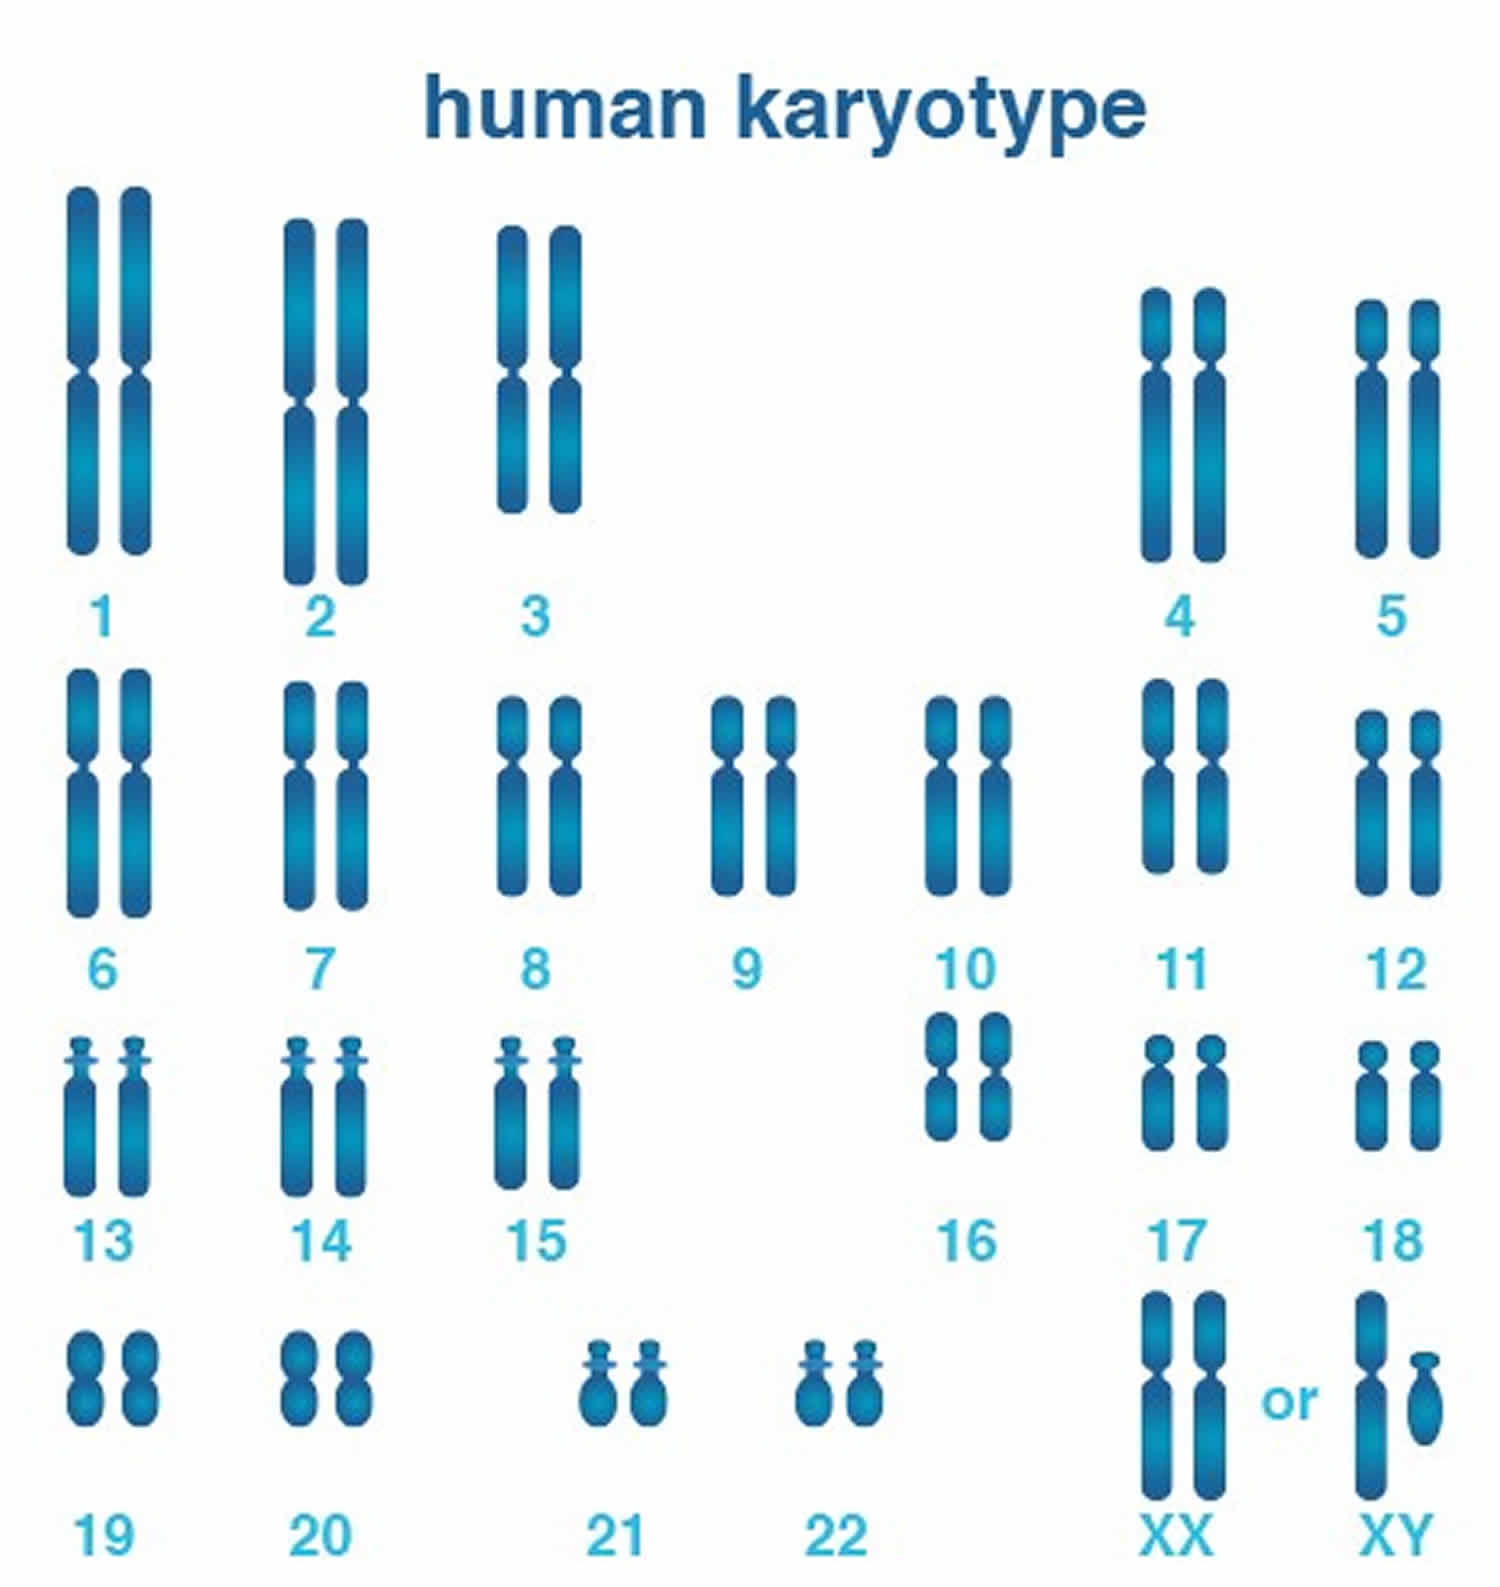 X chromosome, X chromosome function & X chromosome disorders